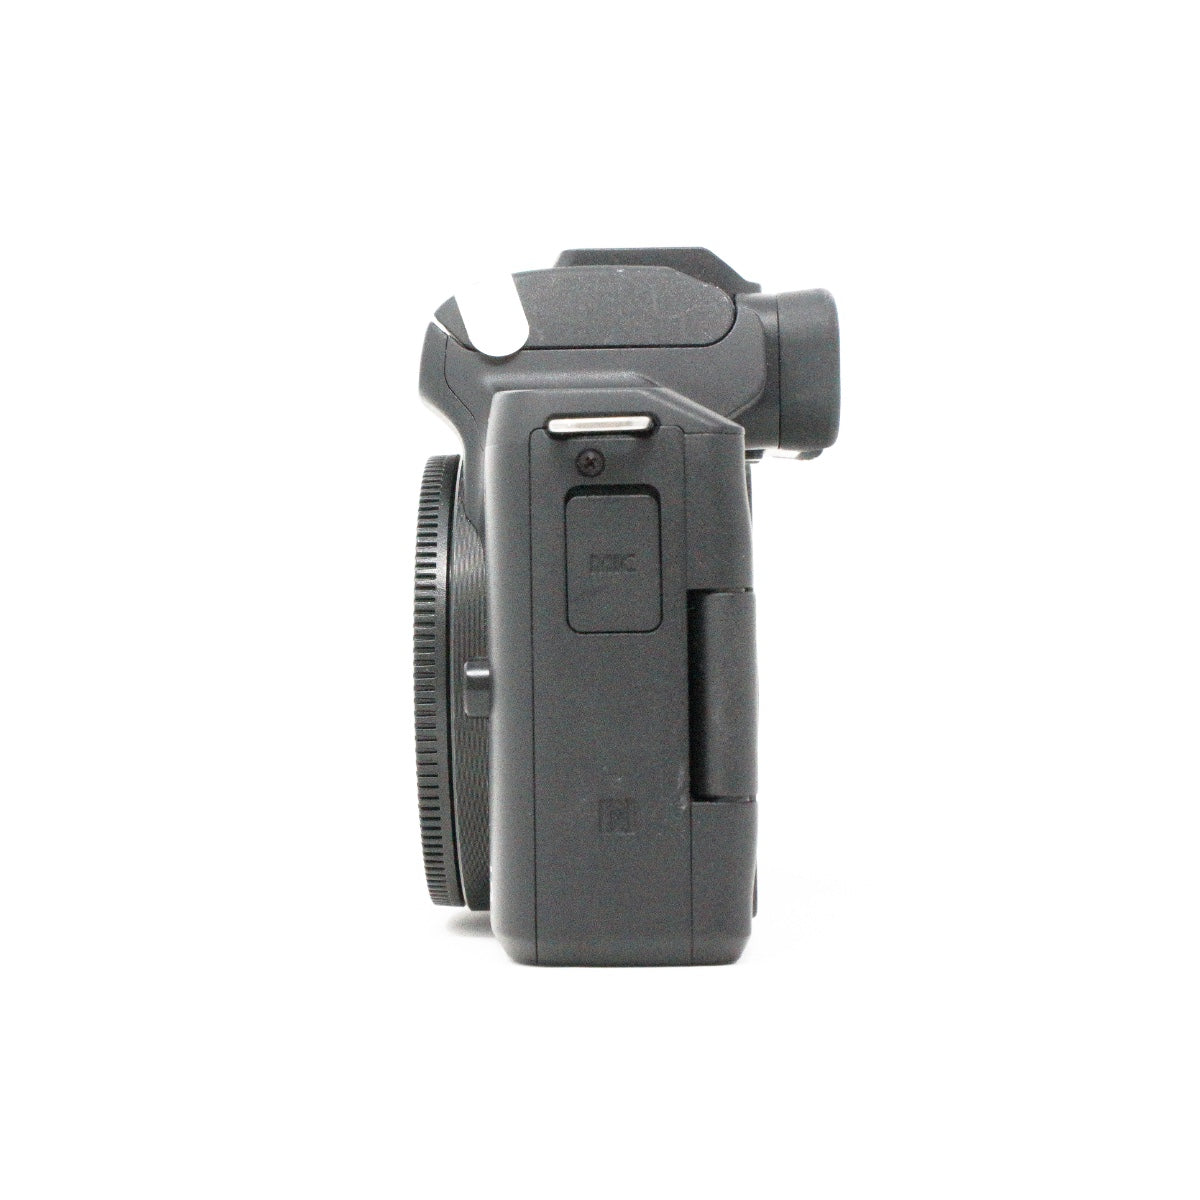 Used canon EOS M50 digital camera body